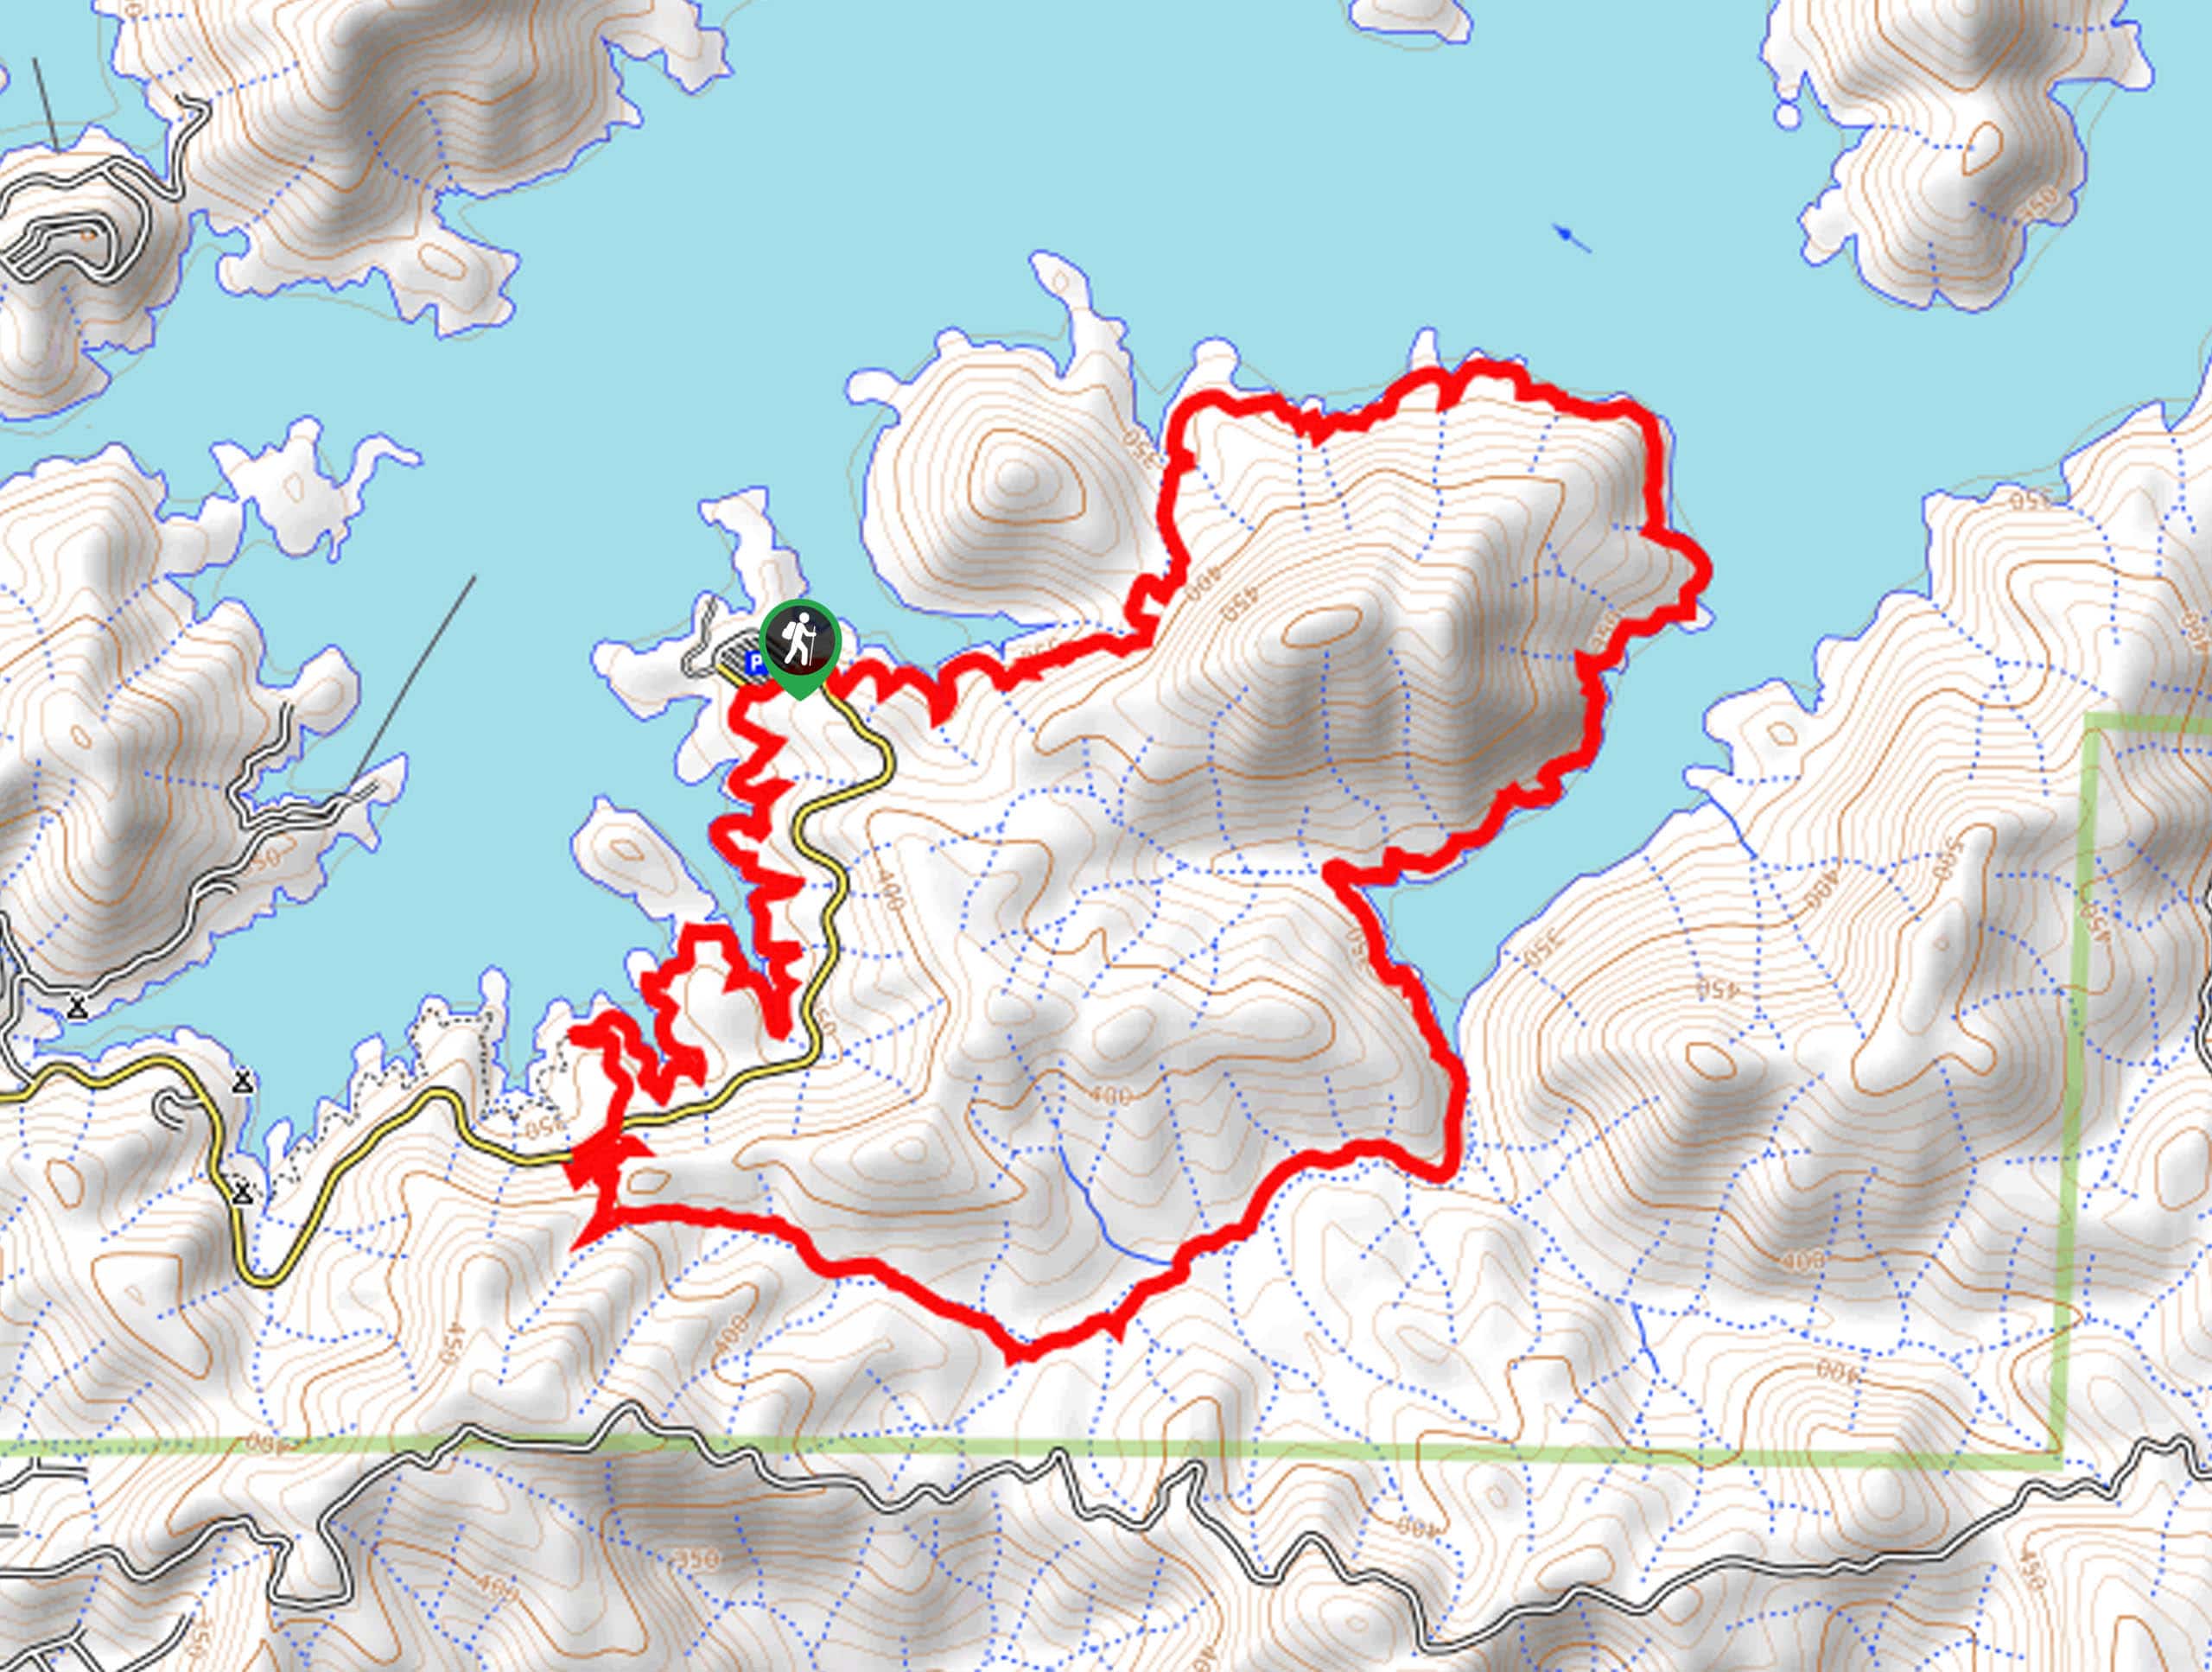 Clikapudi Trail Map